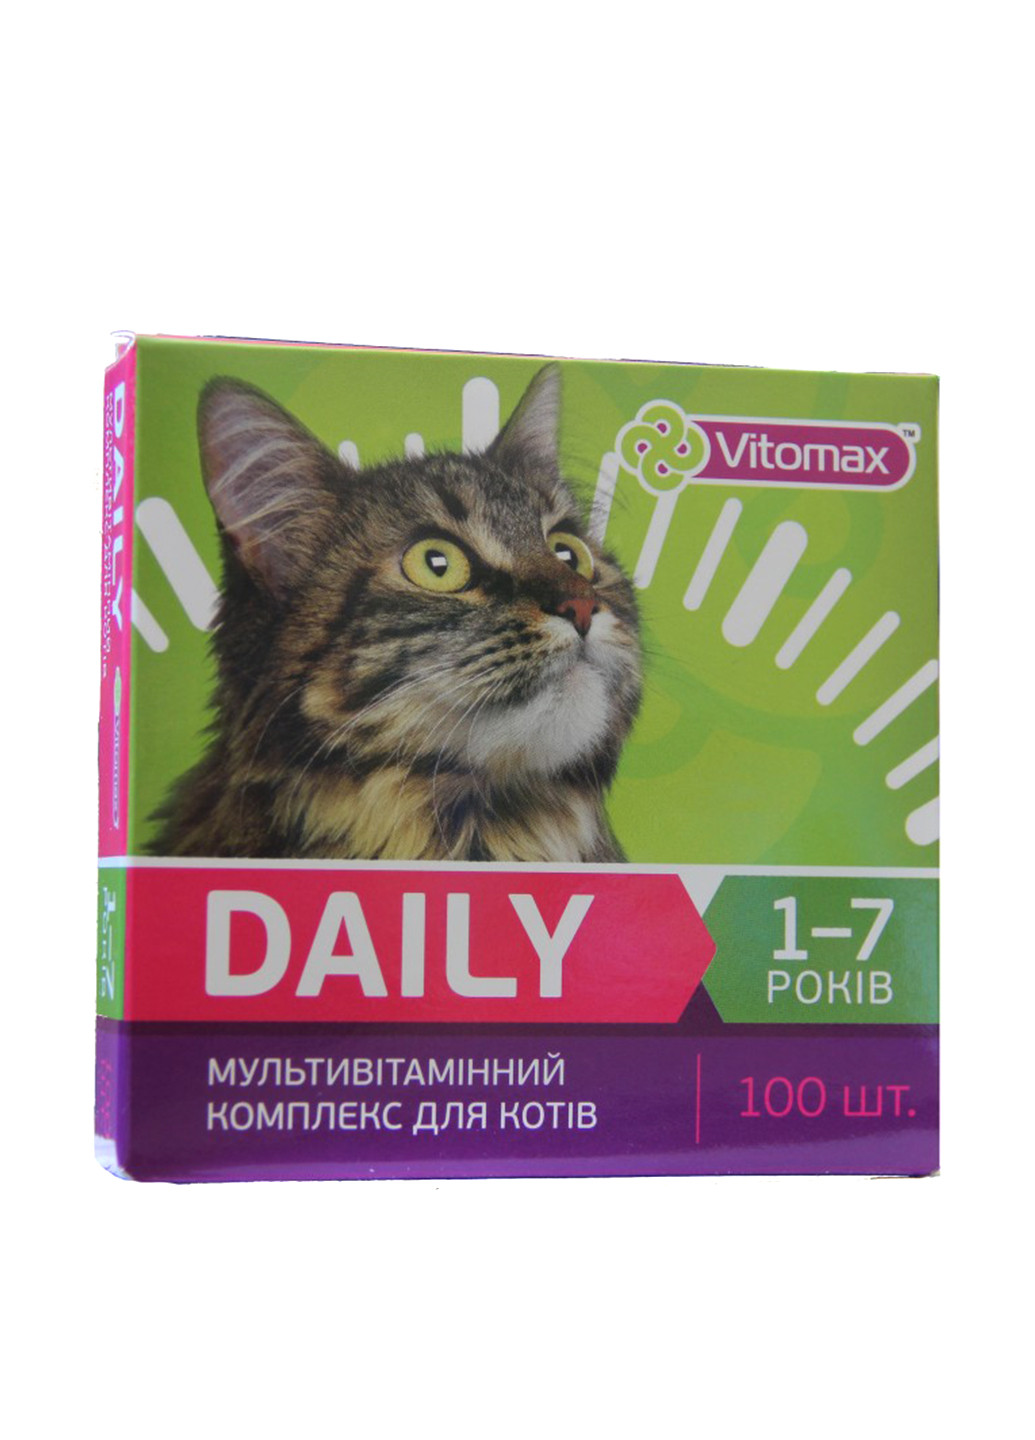 Витамины для котов DAILY, (100 шт.), 50 г Vitomax (76393556)